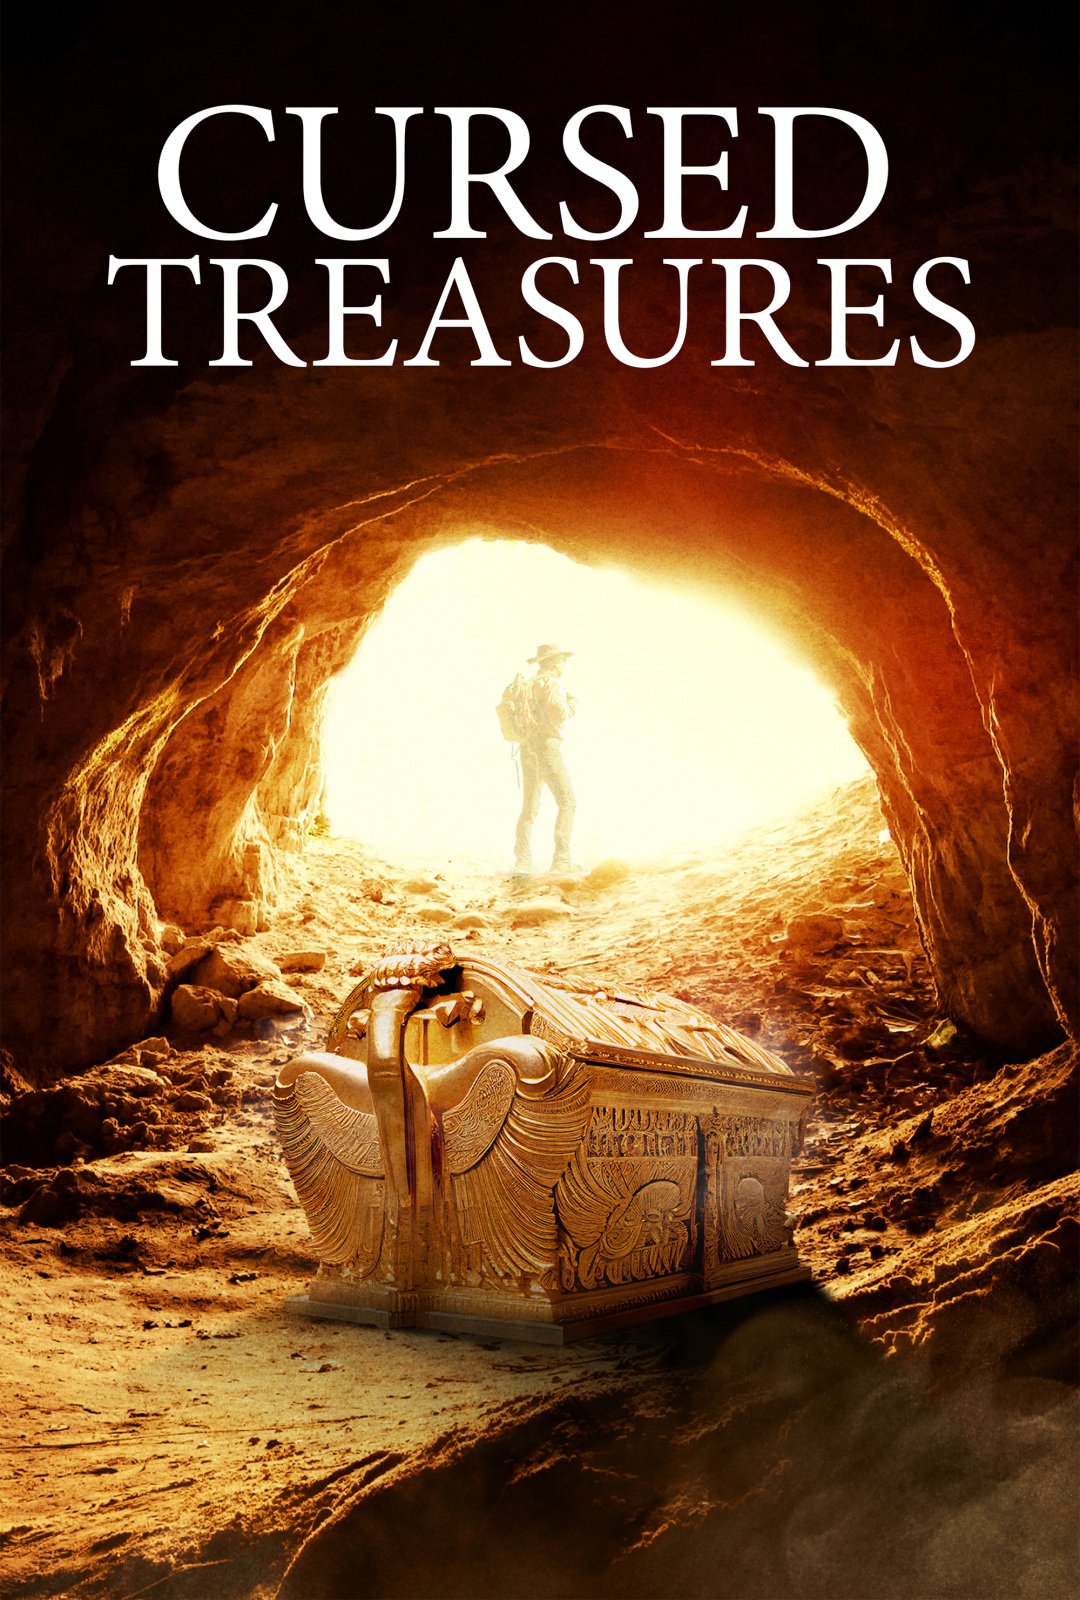 Cursed Treasures  Sky HISTORY TV Channel